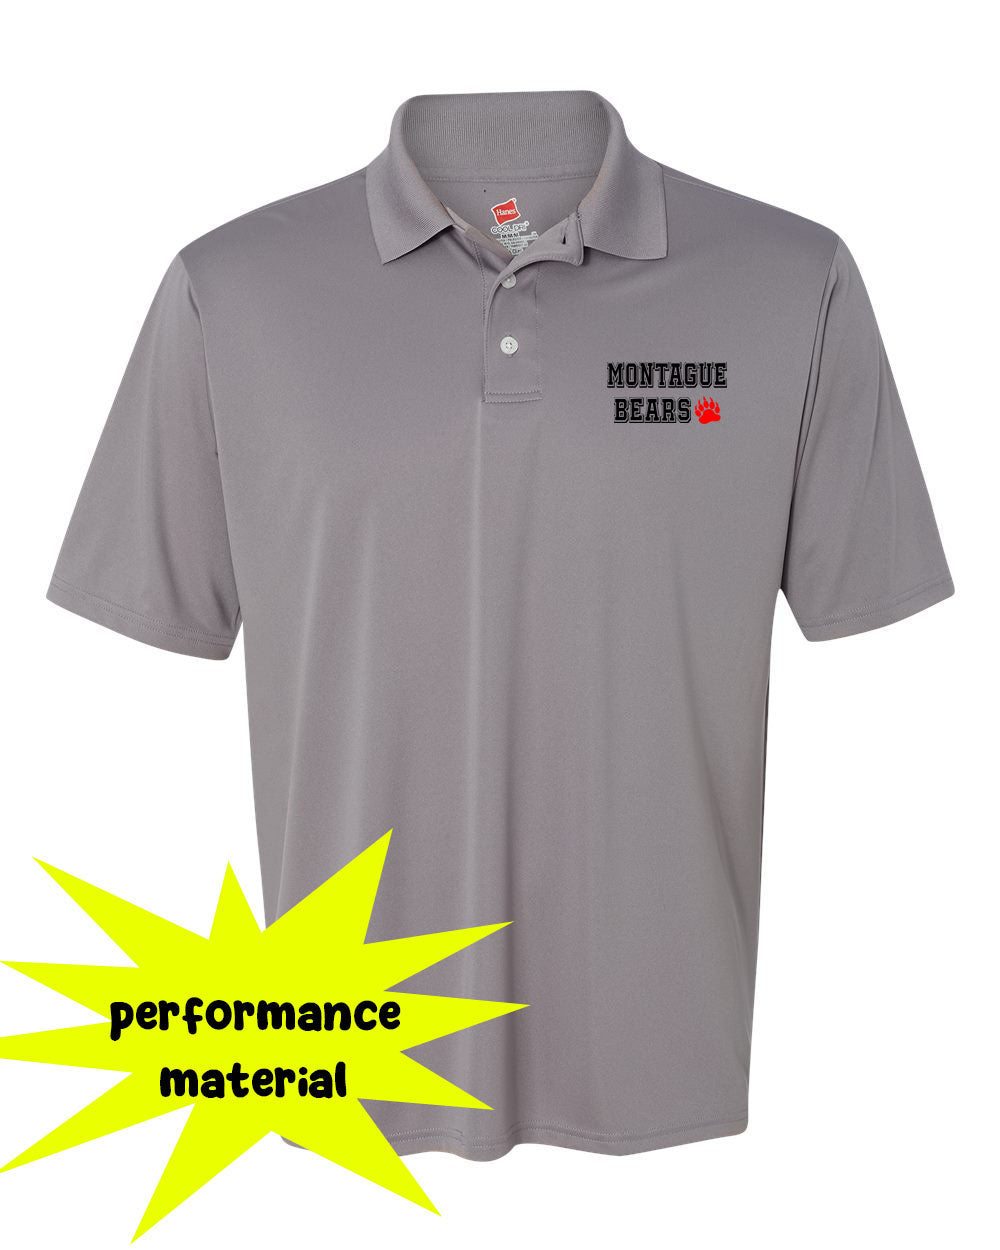 Montague Design 6 Performance Material Polo T-Shirt